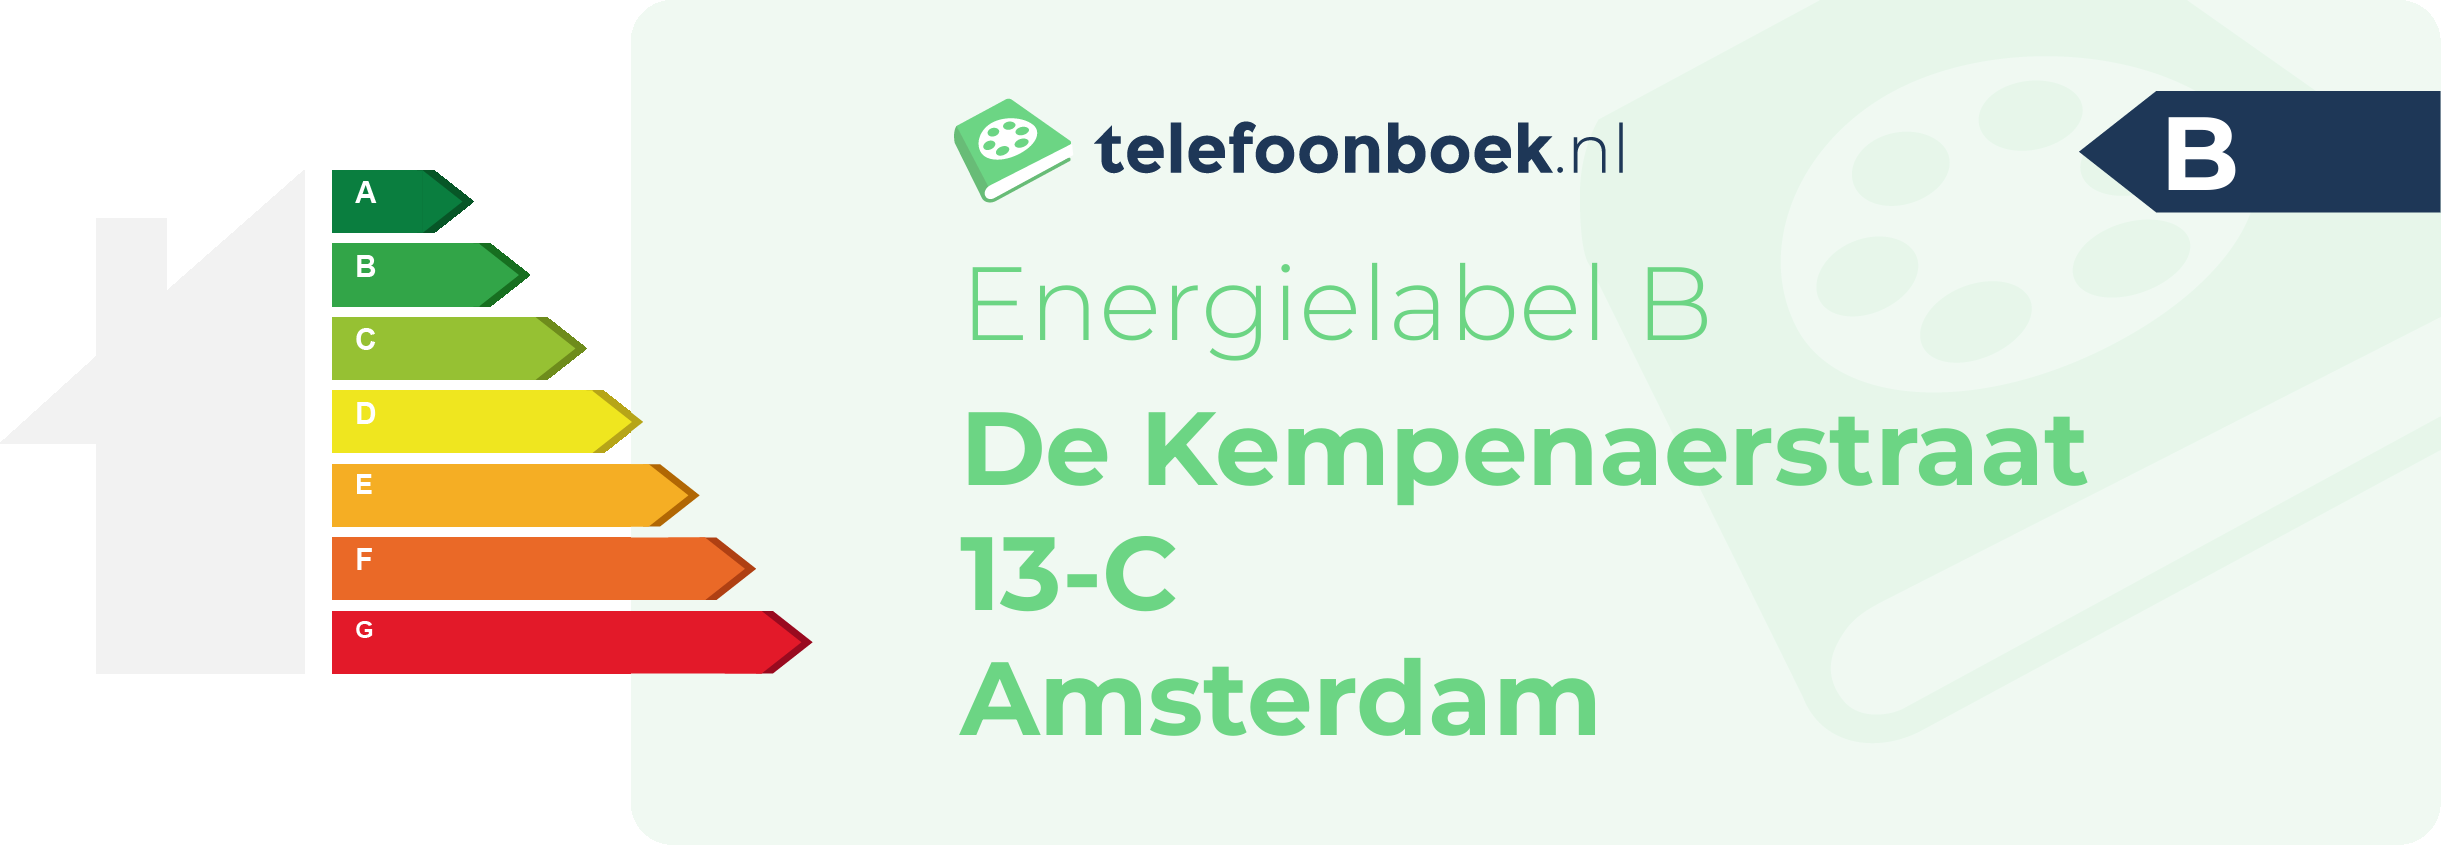 Energielabel De Kempenaerstraat 13-C Amsterdam